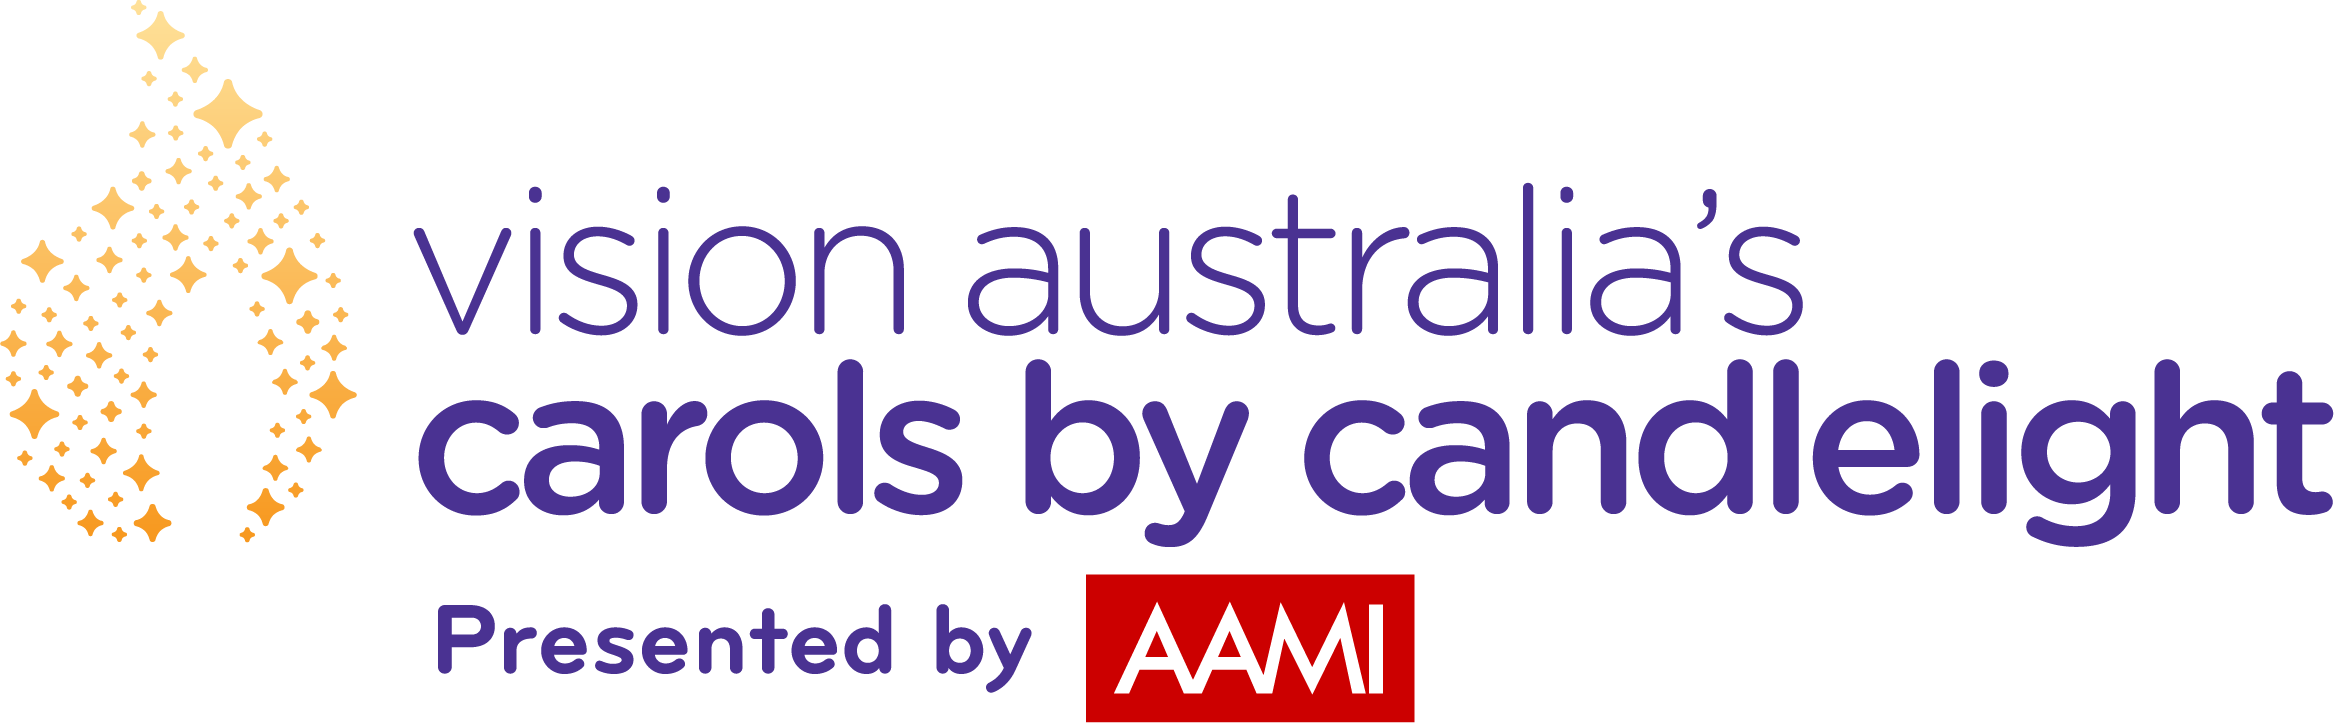 Vision Australia's Carols by Candlelight logo